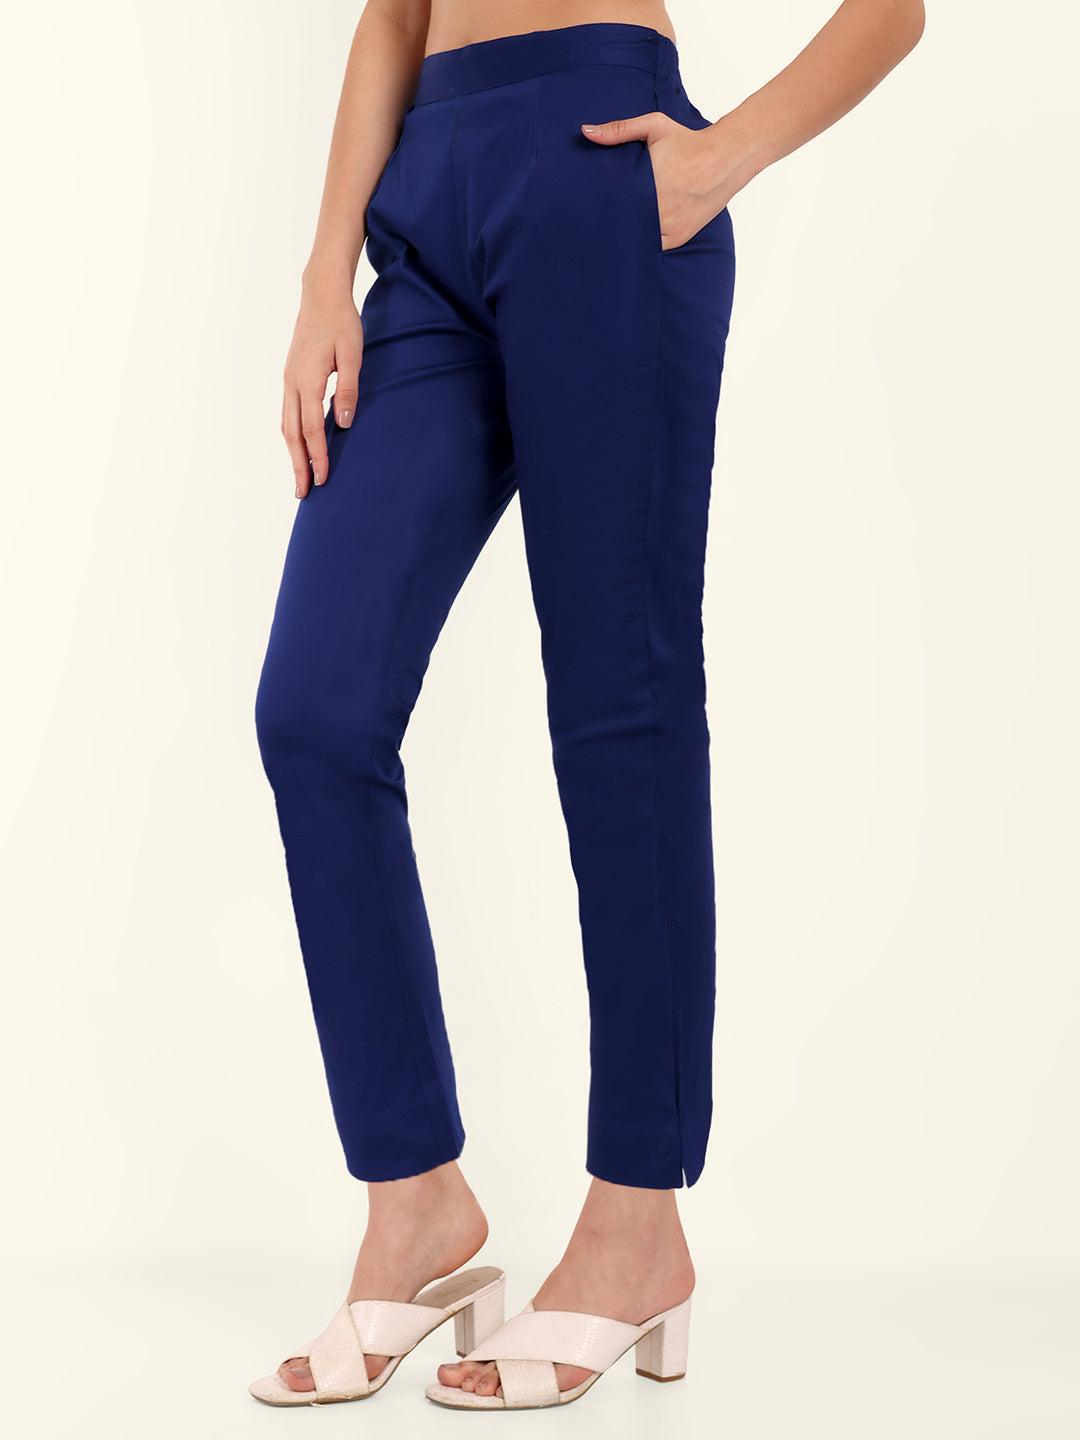 inhzoy Kids Girls Cargo Jogger Pants 4 Pockets Cotton Fashion Bottoms with  Drawstring Black 14 - Walmart.com